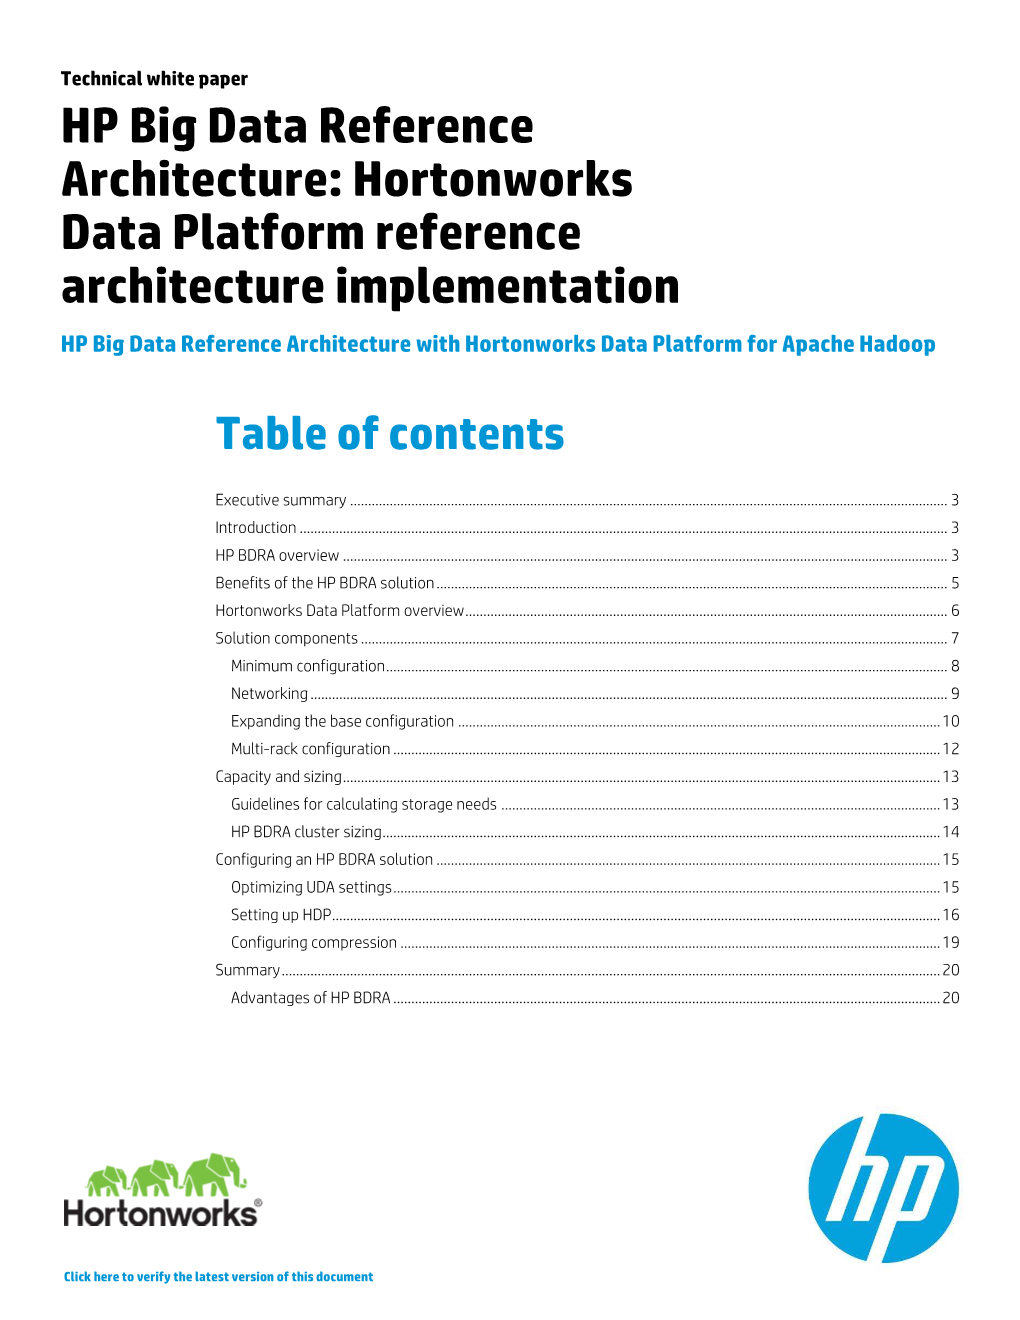 Hortonworks Data Platform Reference Architecture Implementation HP Big Data Reference Architecture with Hortonworks Data Platform for Apache Hadoop